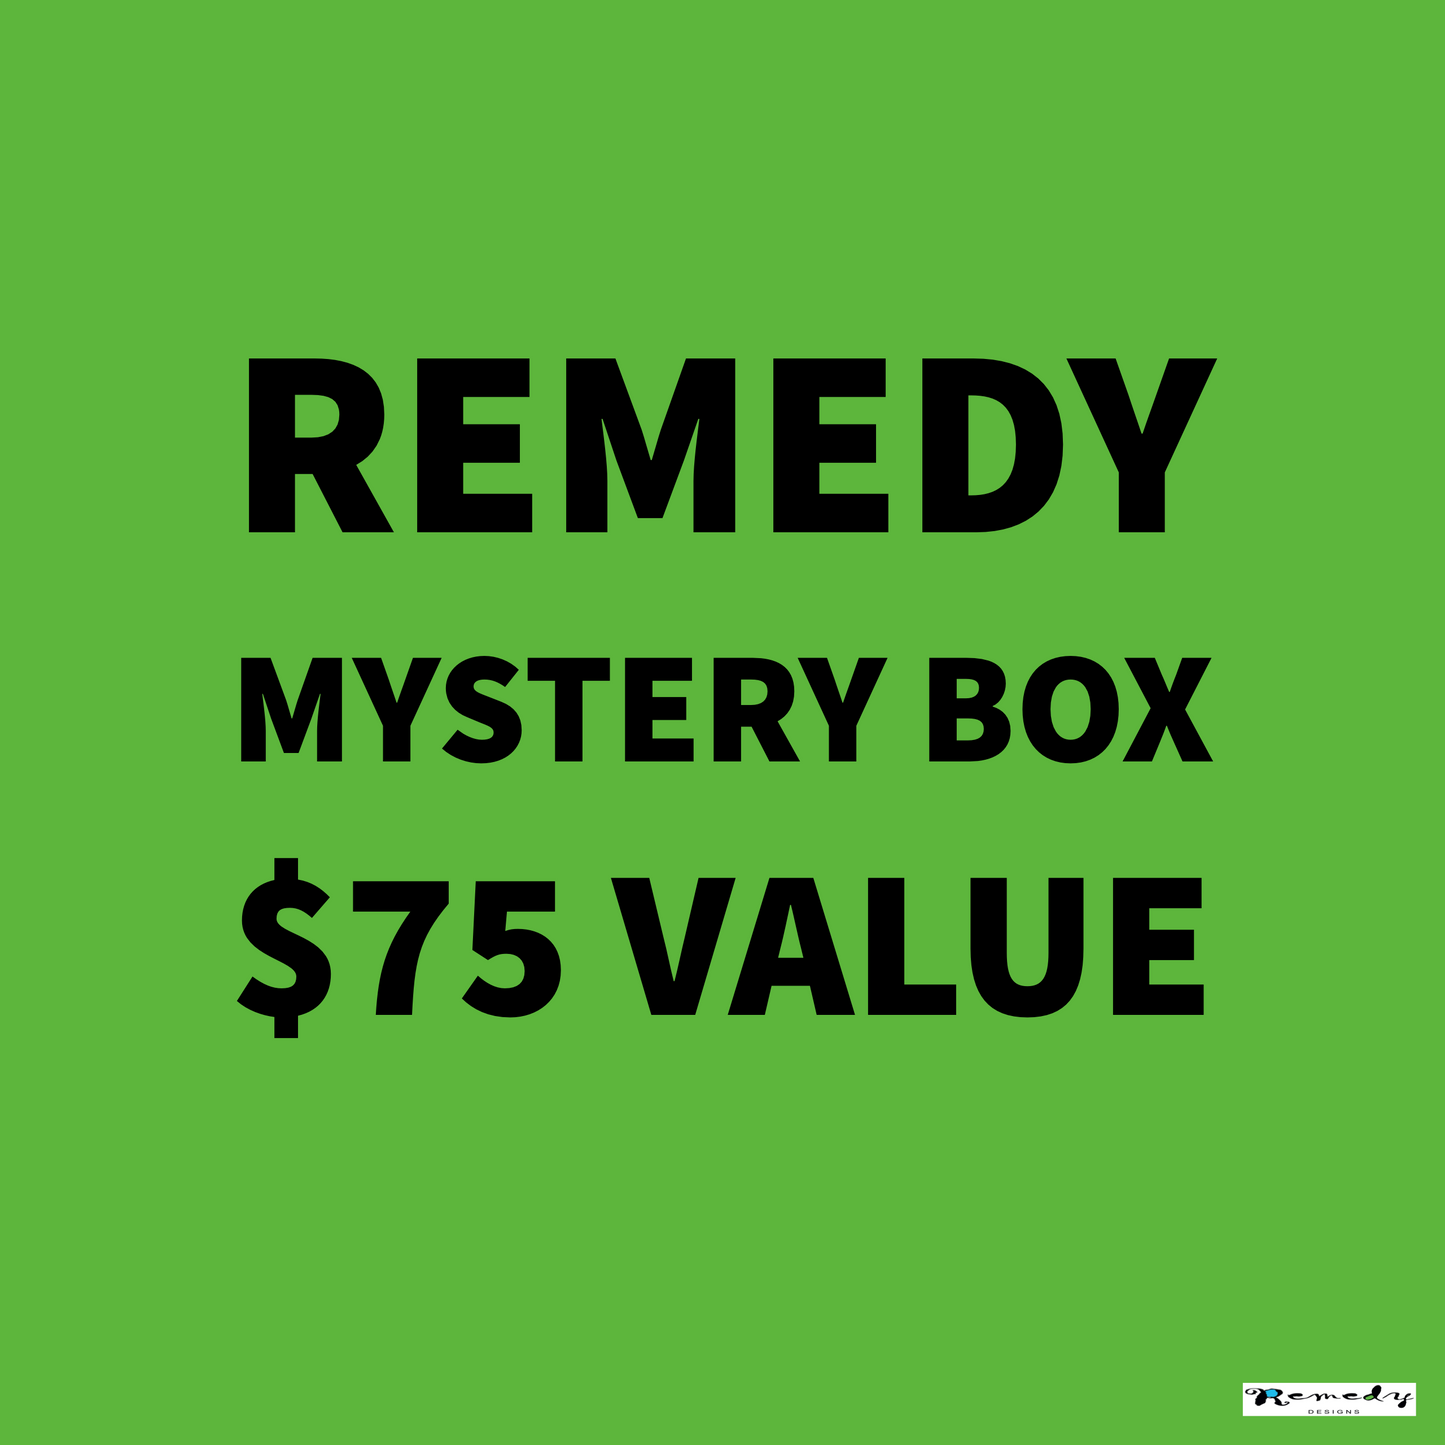 Remedy Mystery Box $75